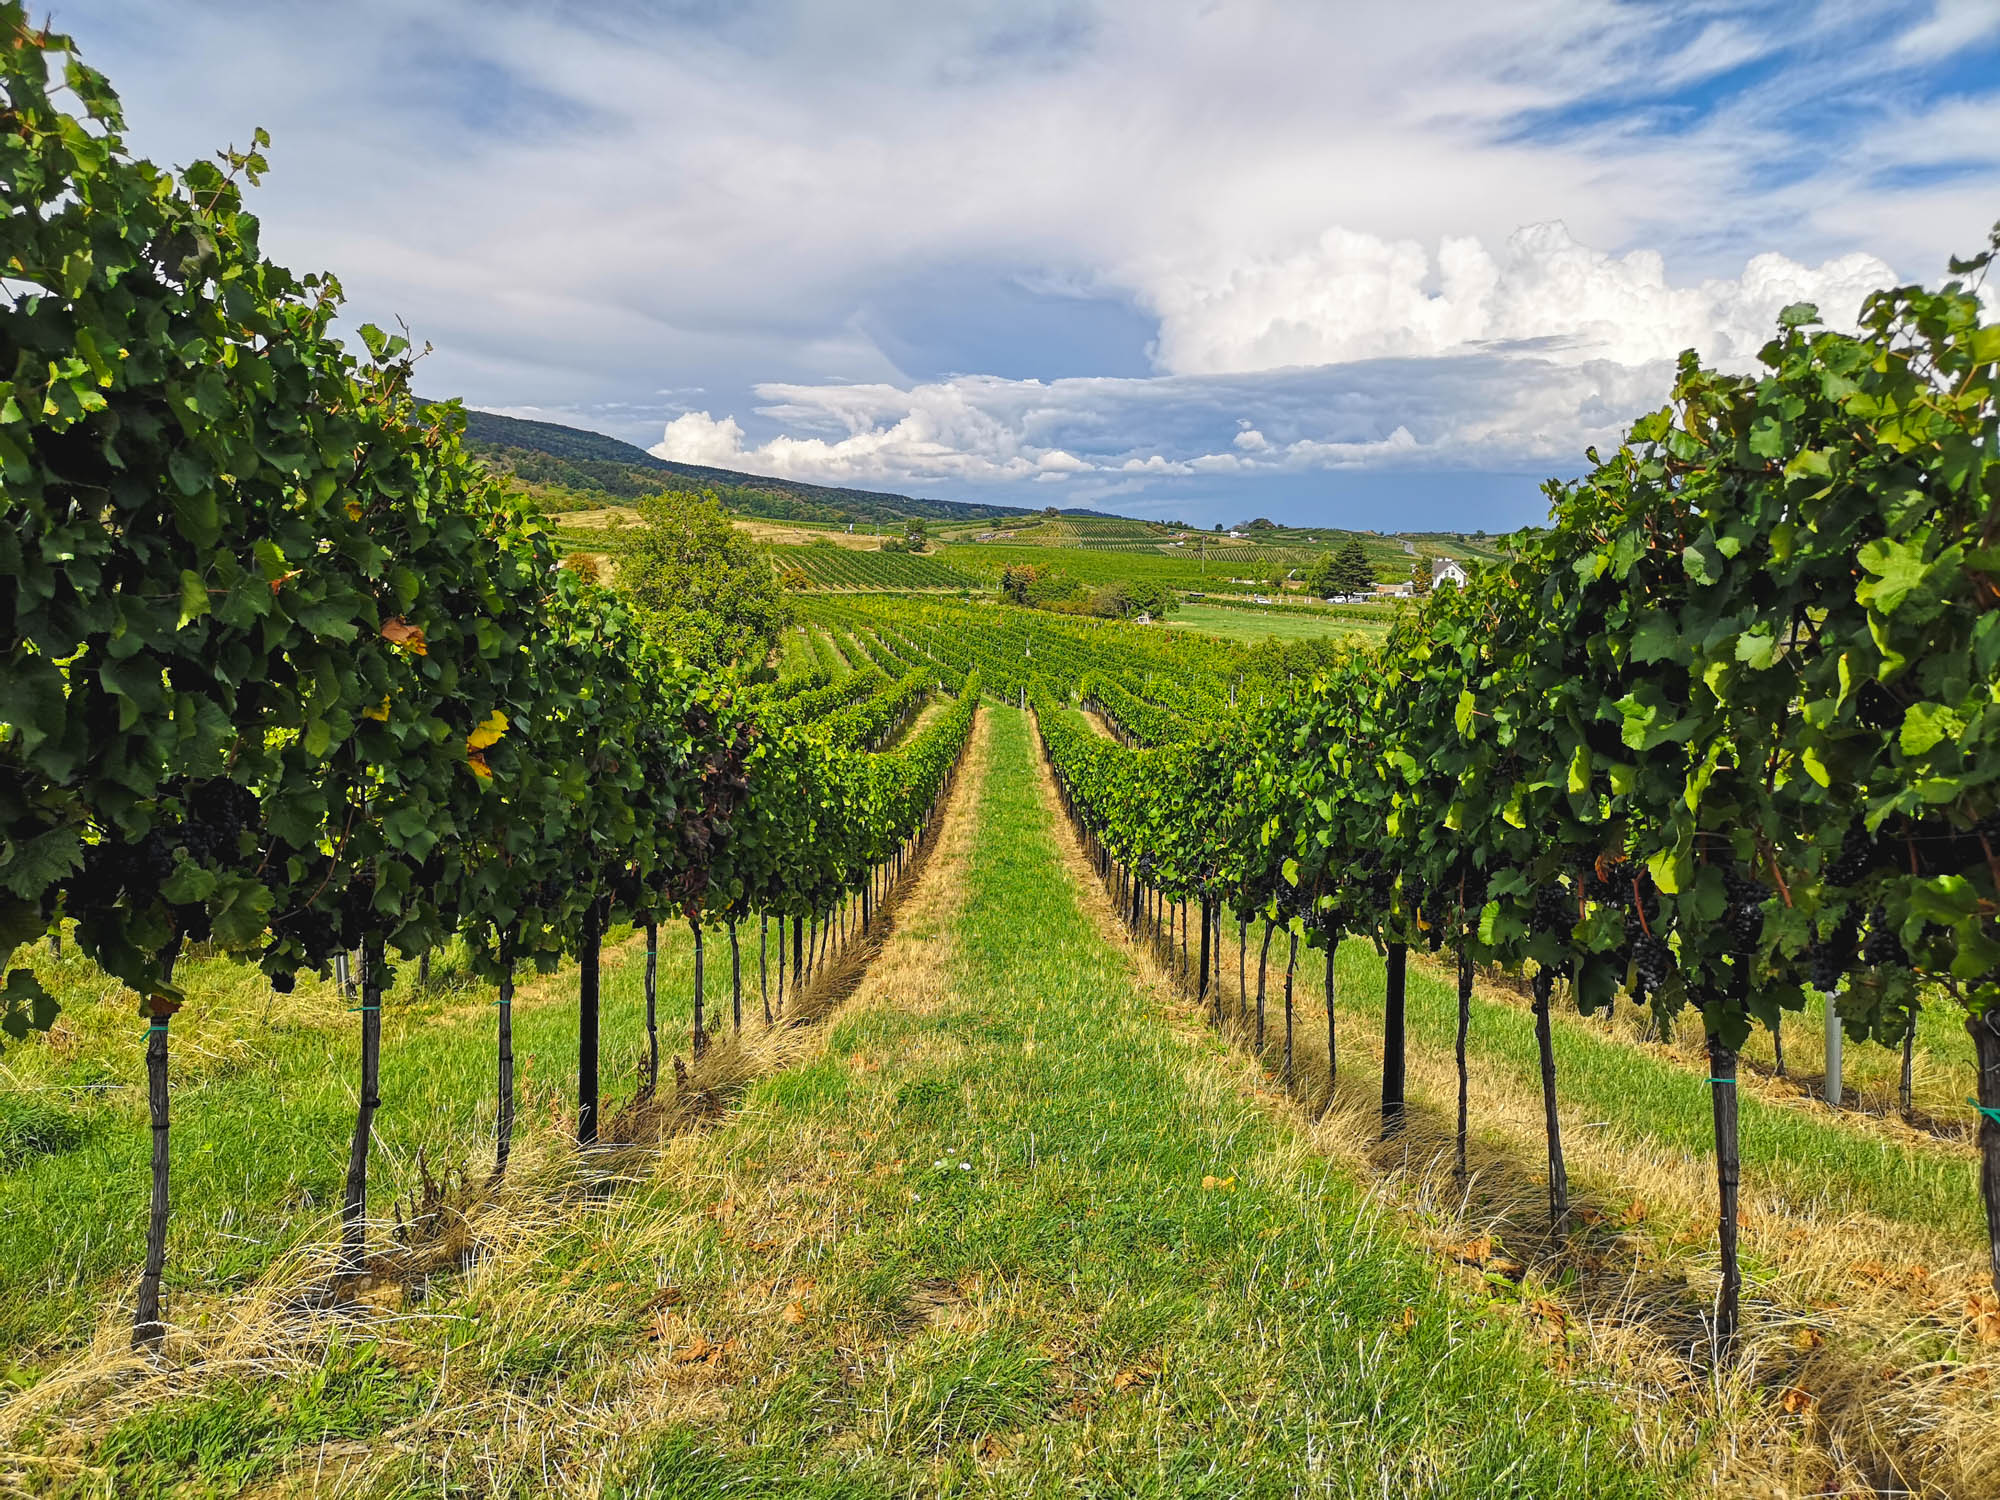 Thermeregion vineyards, Lower Austria